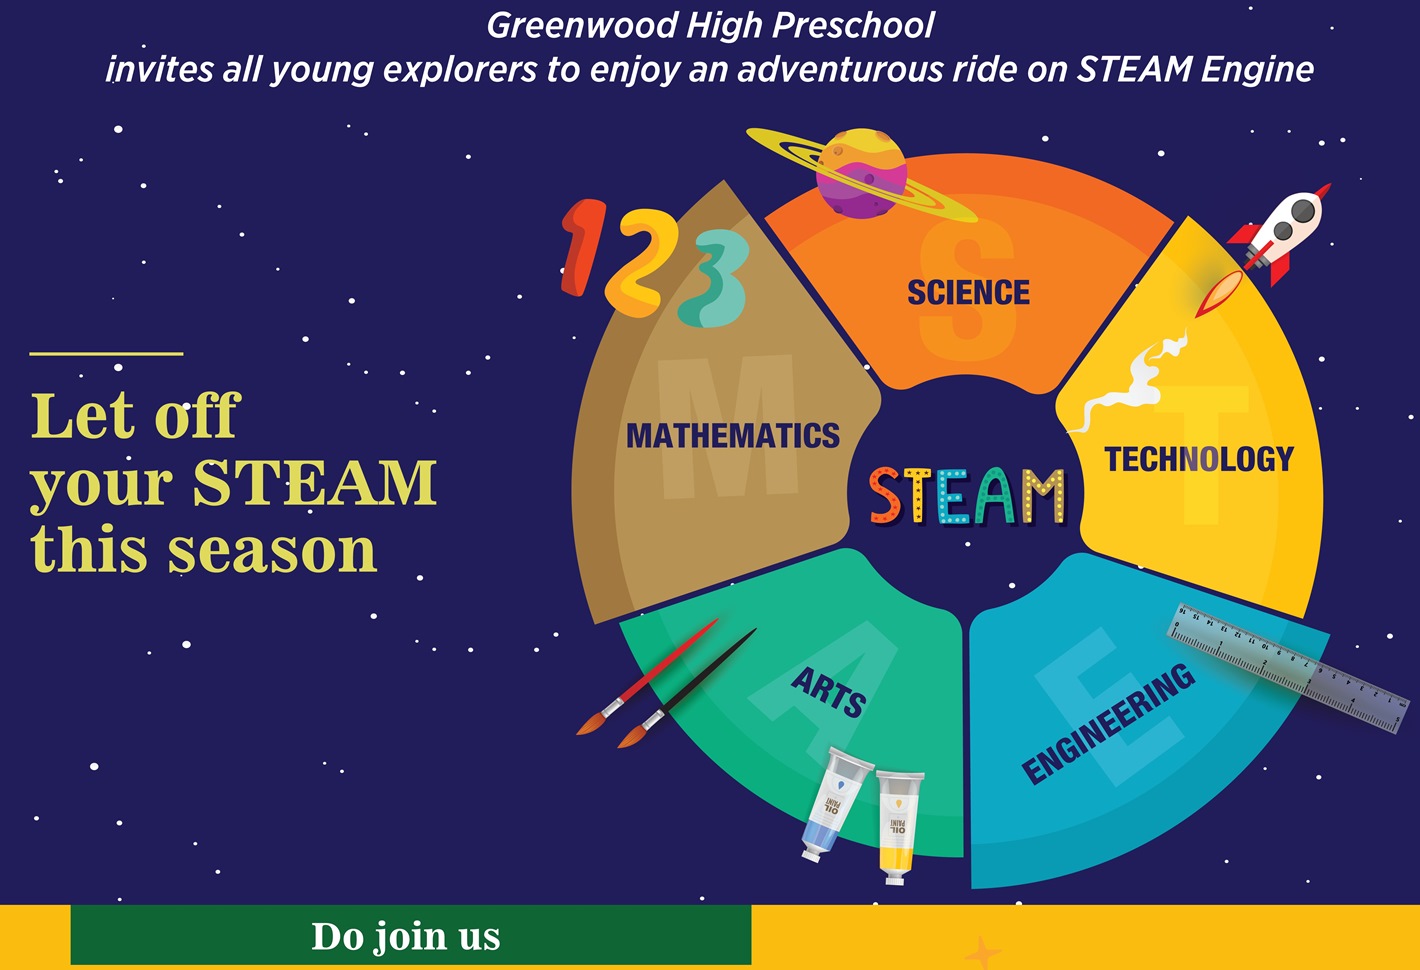 Greenwood High Preschool to host STEAM event for kids decoding=